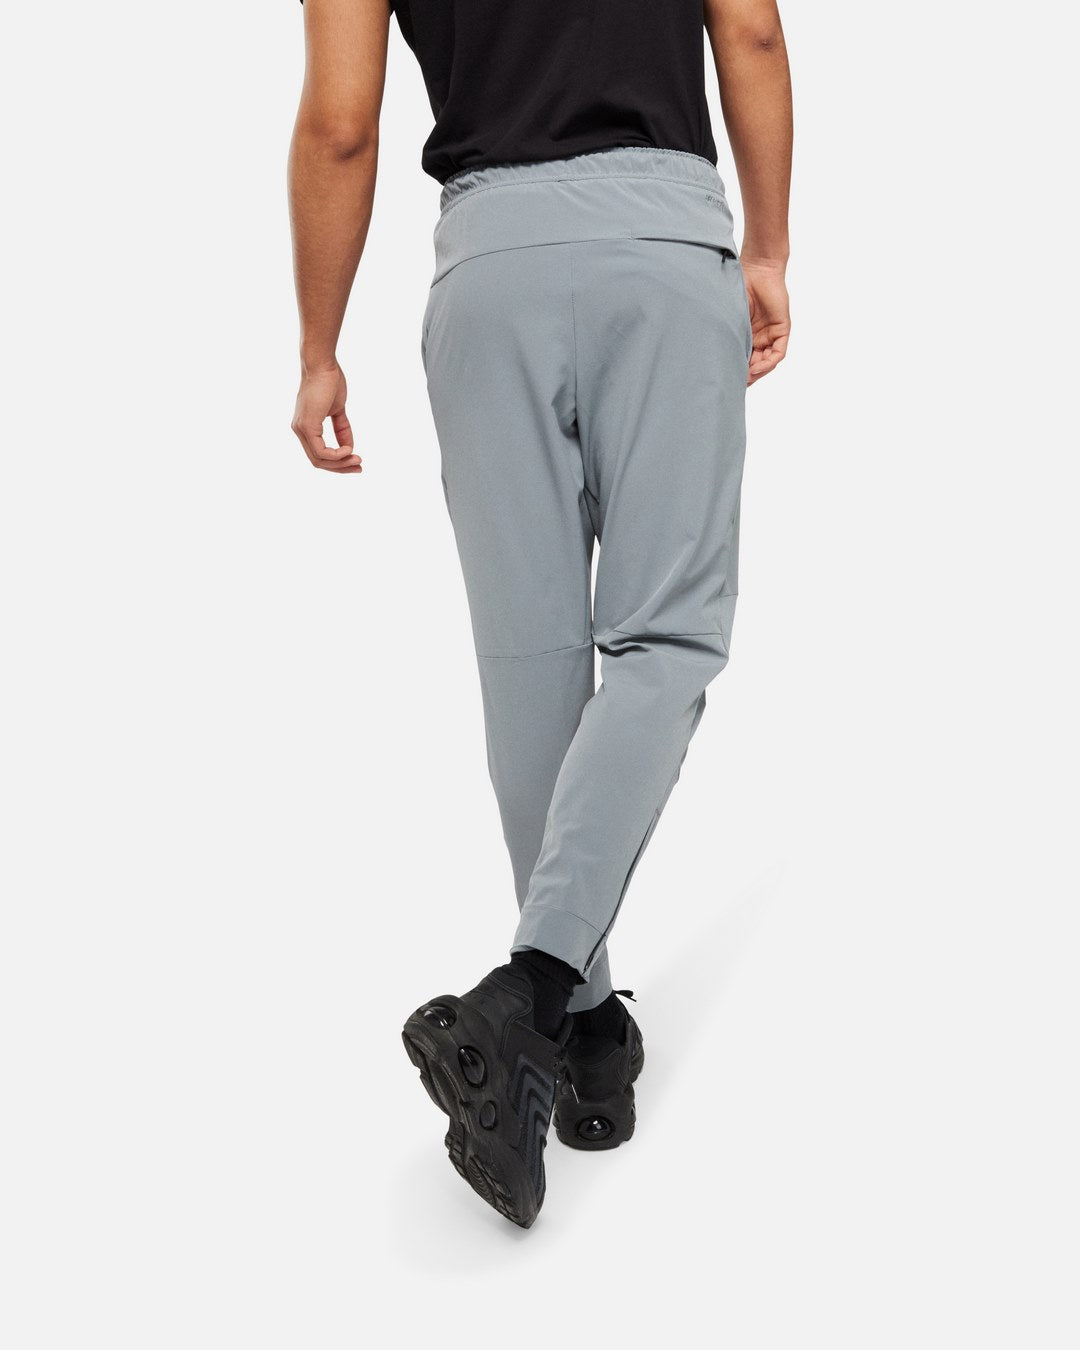 Jogginghose Nike Unlimited - Grau